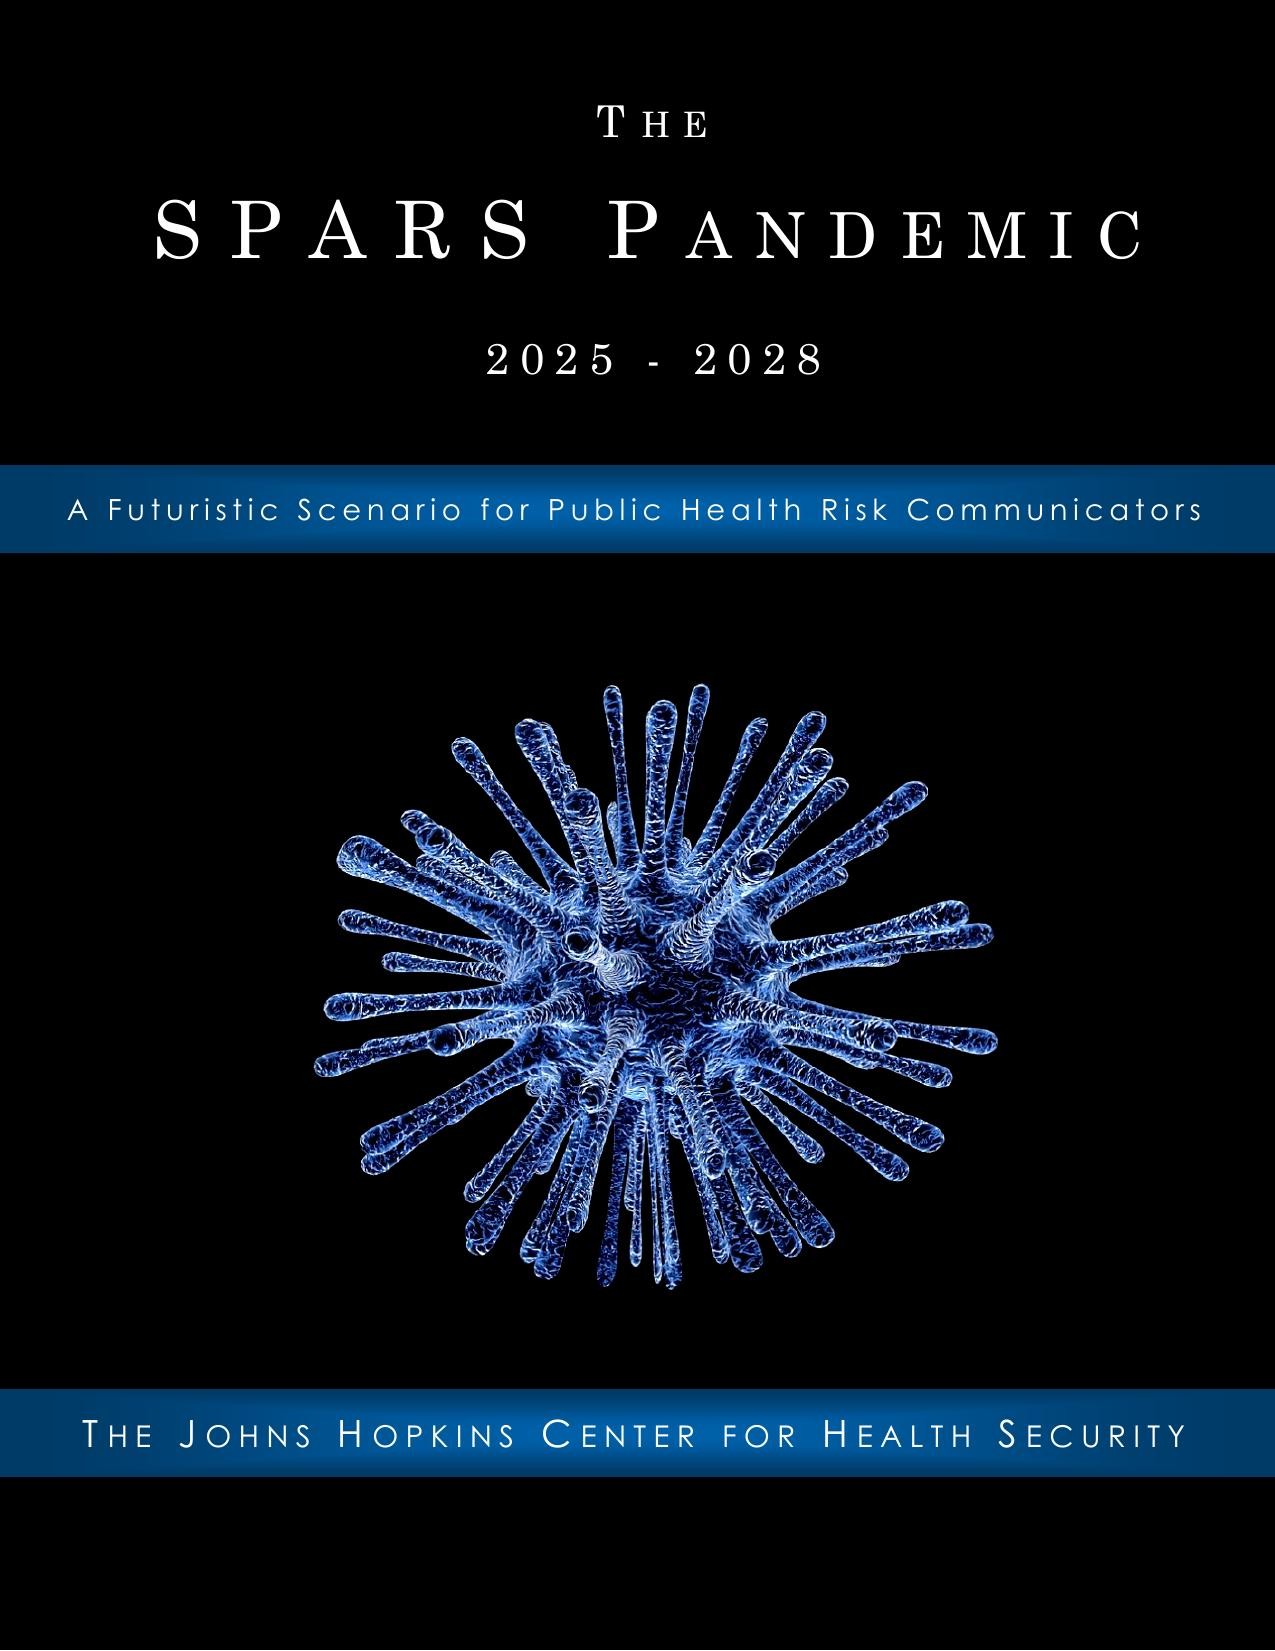 The Spars Pandemic 2025-2028: A Futuristic Scenario for Public Health Risk Communications